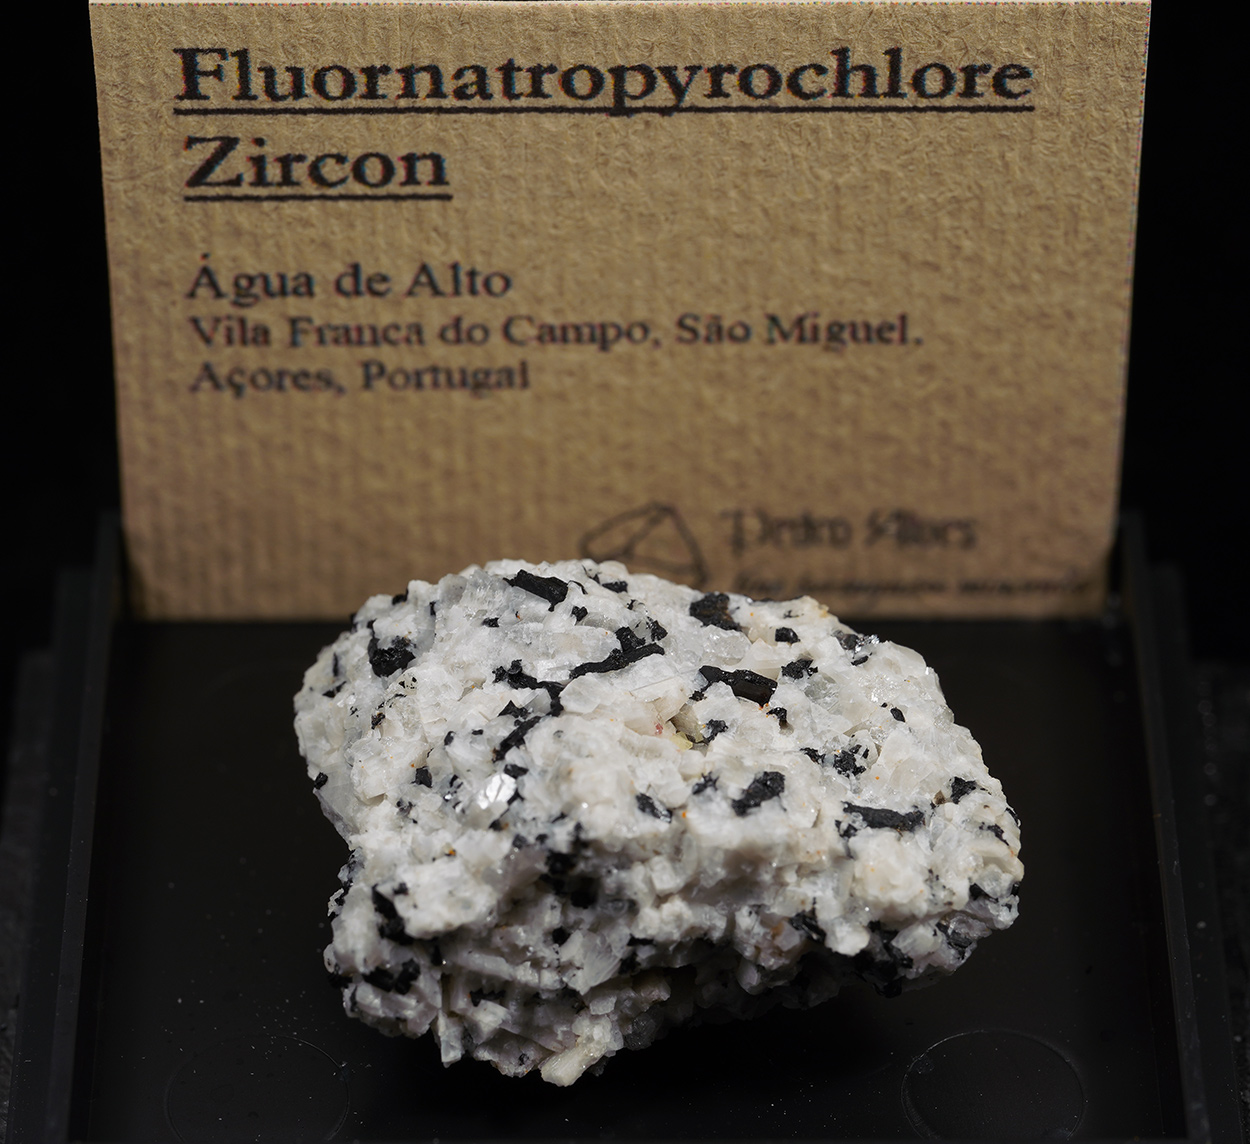 Zircon & Fluornatropyrochlore